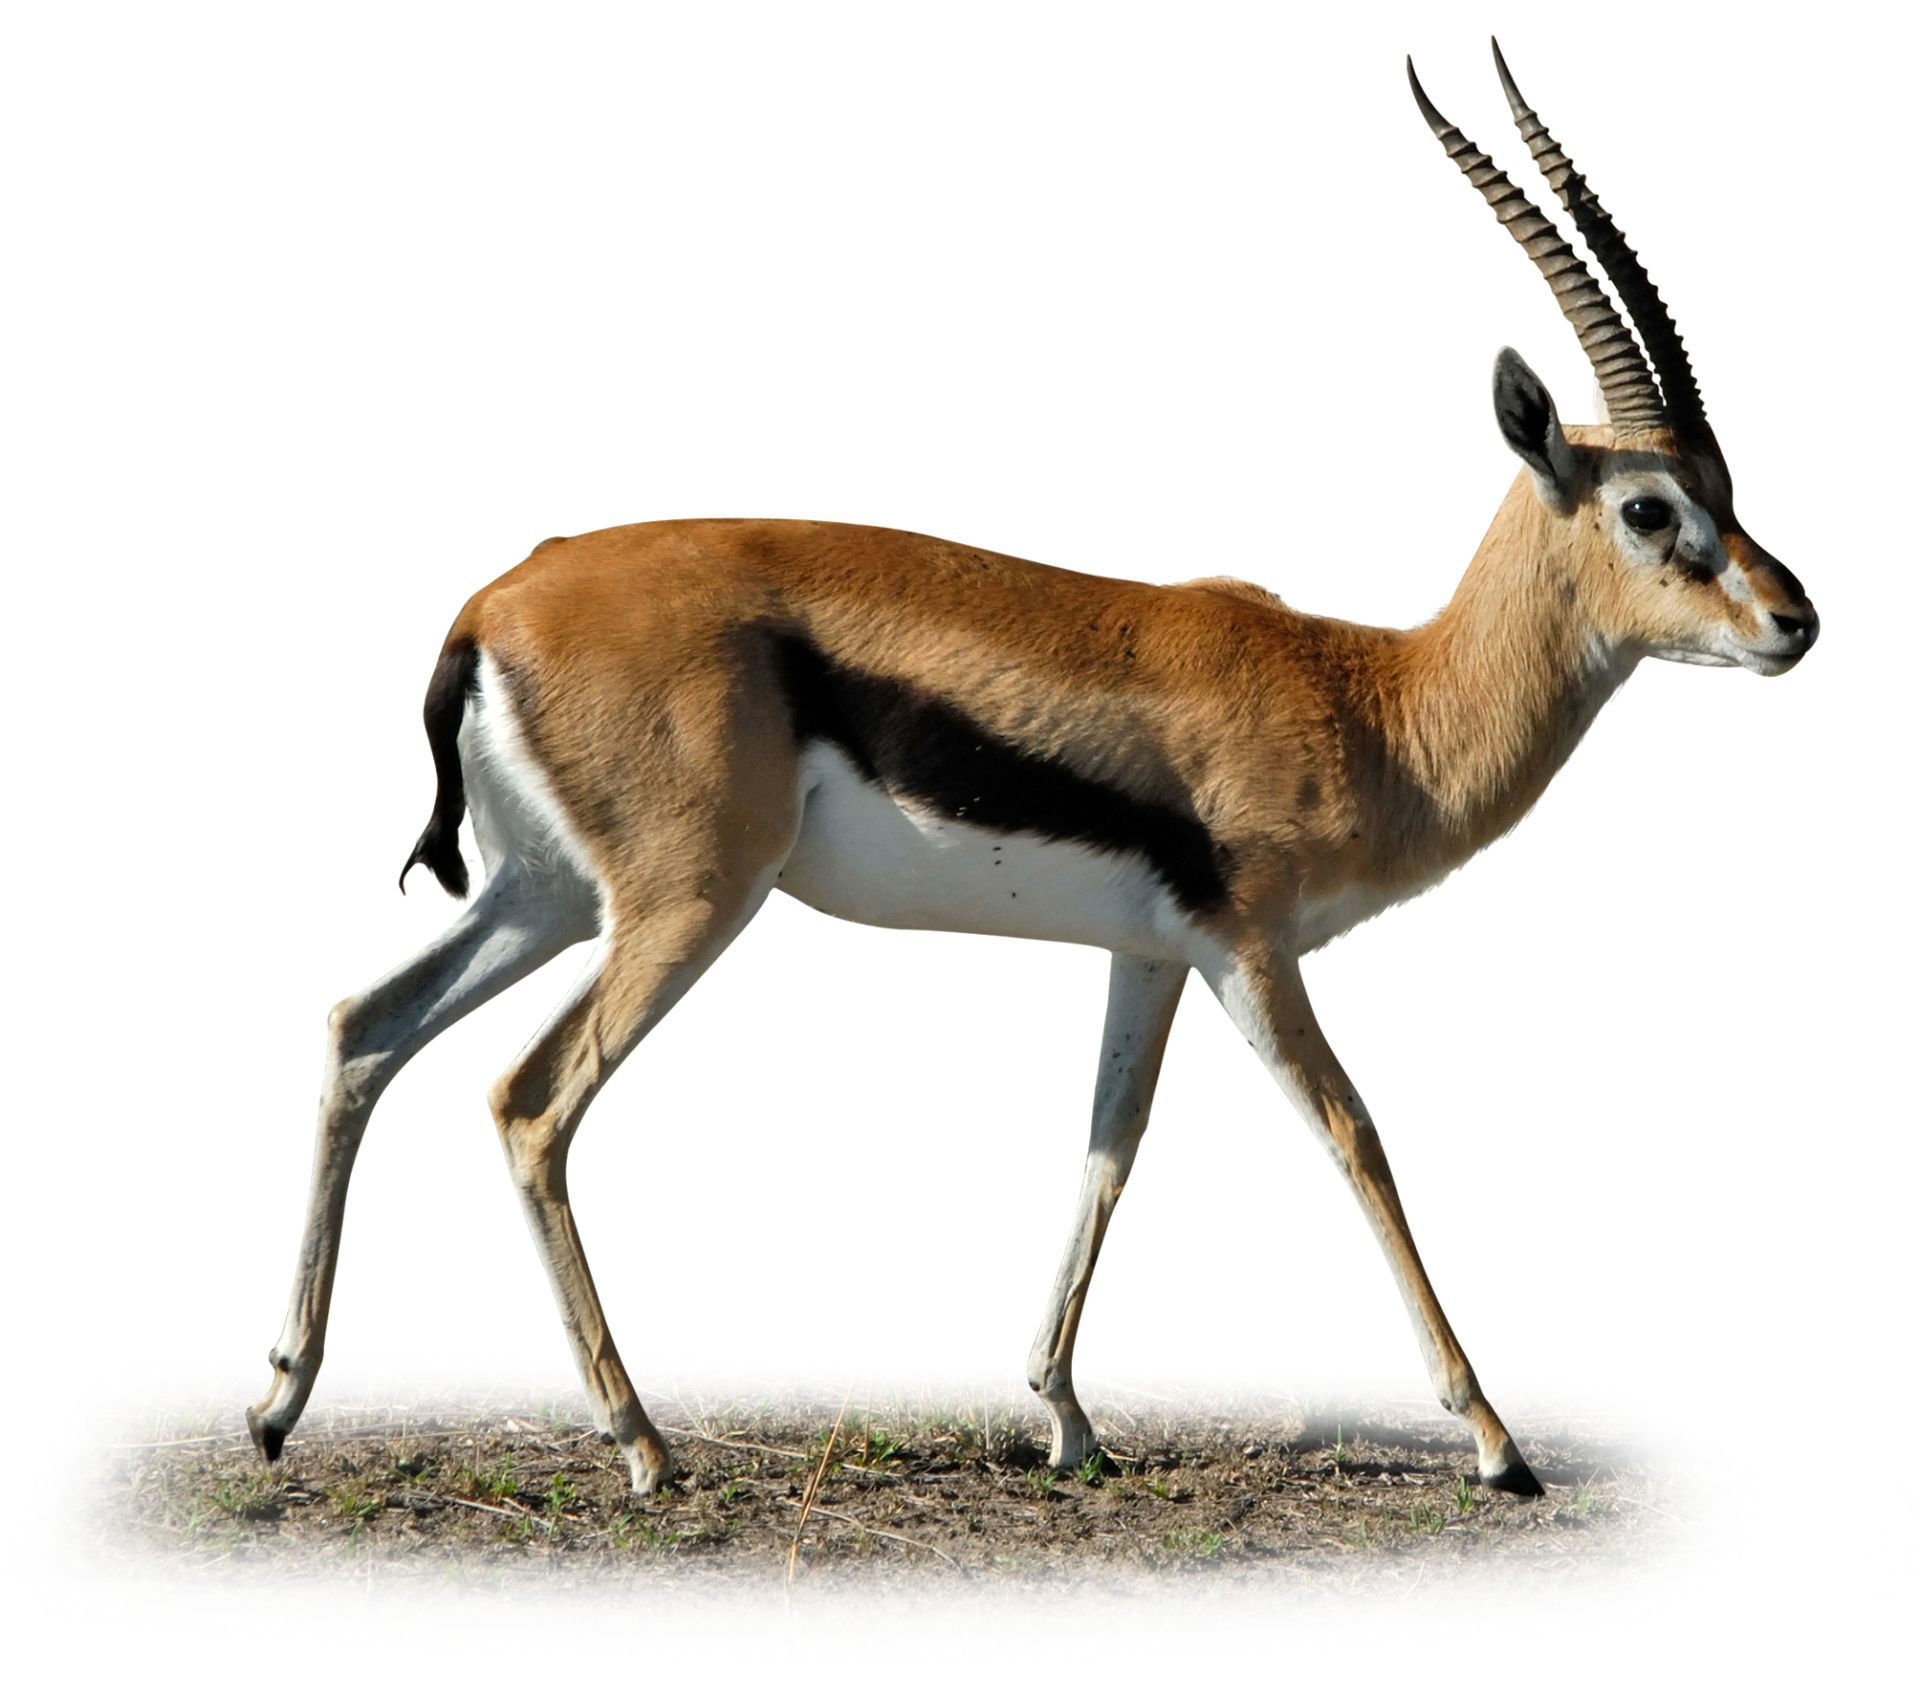 Thomson Gazelle Facts | Facts About Gazelles | DK Find Out